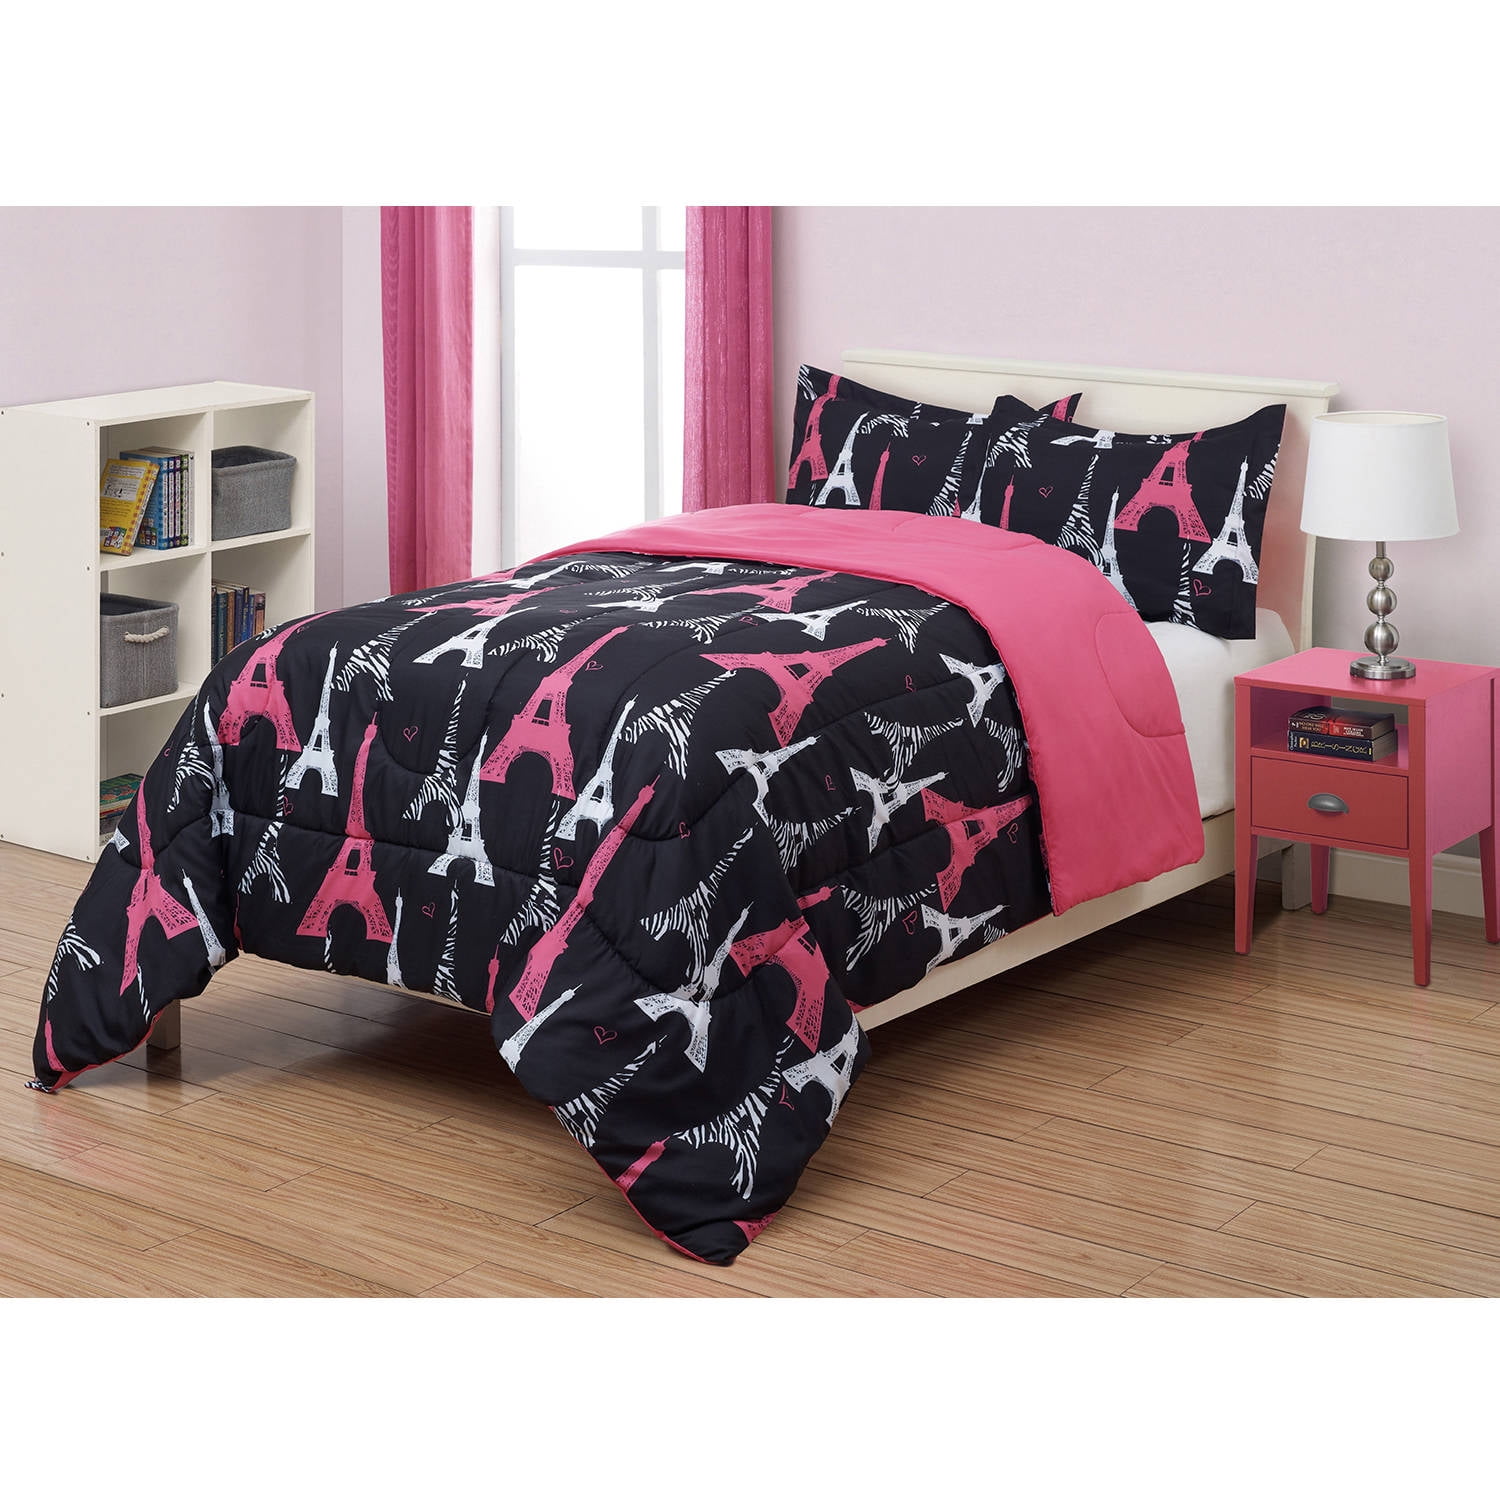 Twin or Full Bedding Girls Comforter Bed Set Paris Eiffel Tower Pink Purple 